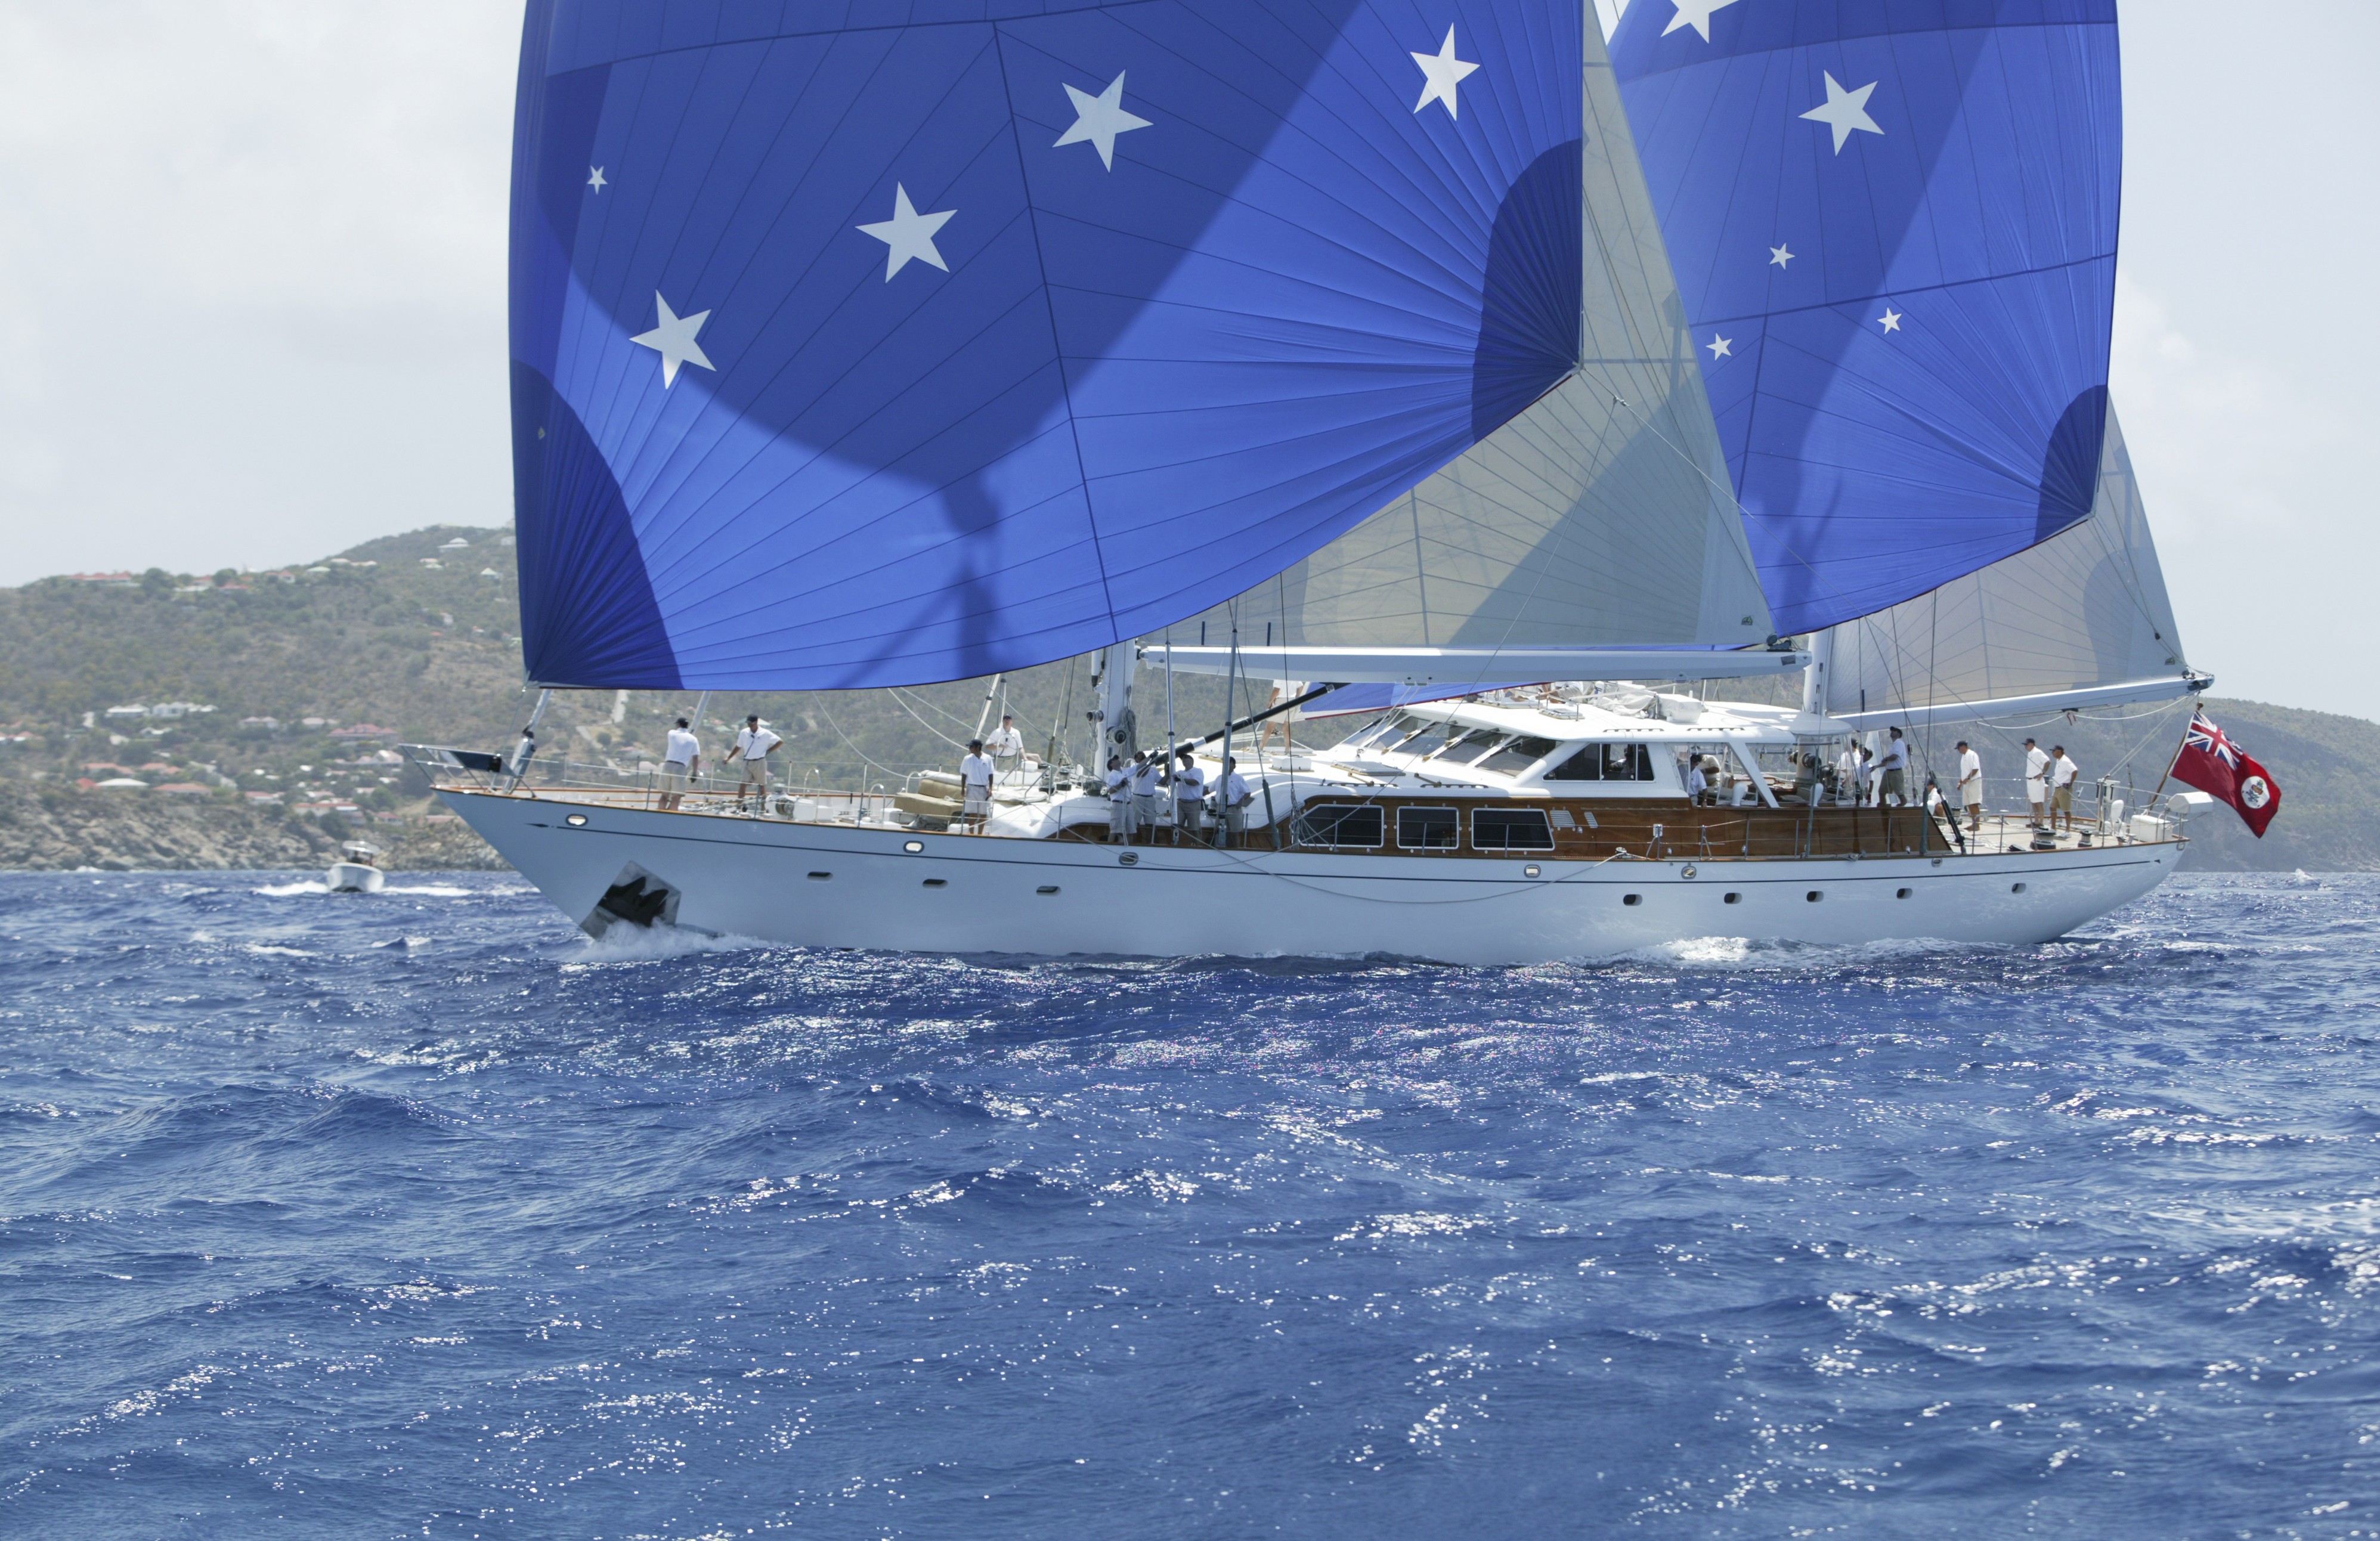 freedom yacht charters ltd